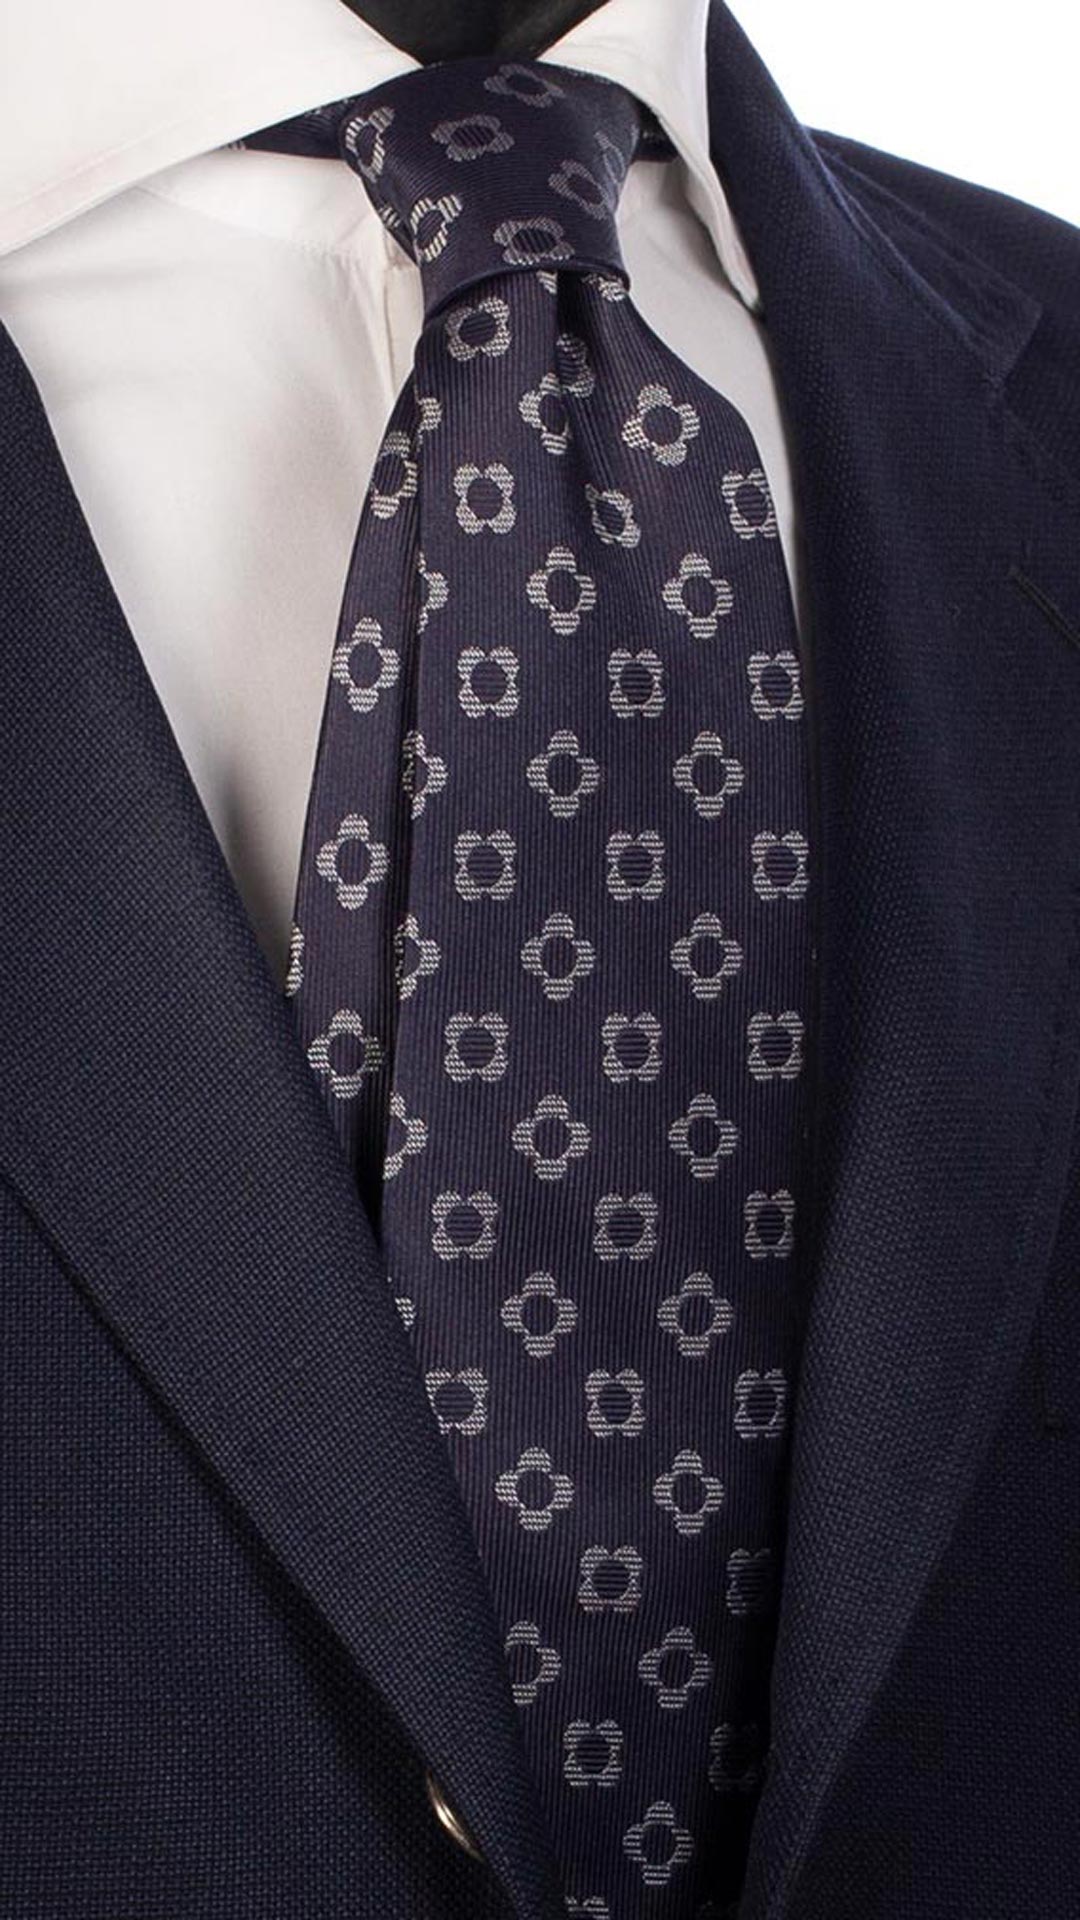 Cravatta da Cerimonia di Seta Blu Fantasia Grigia CY2710 Made in Italy Graffeo Cravatte